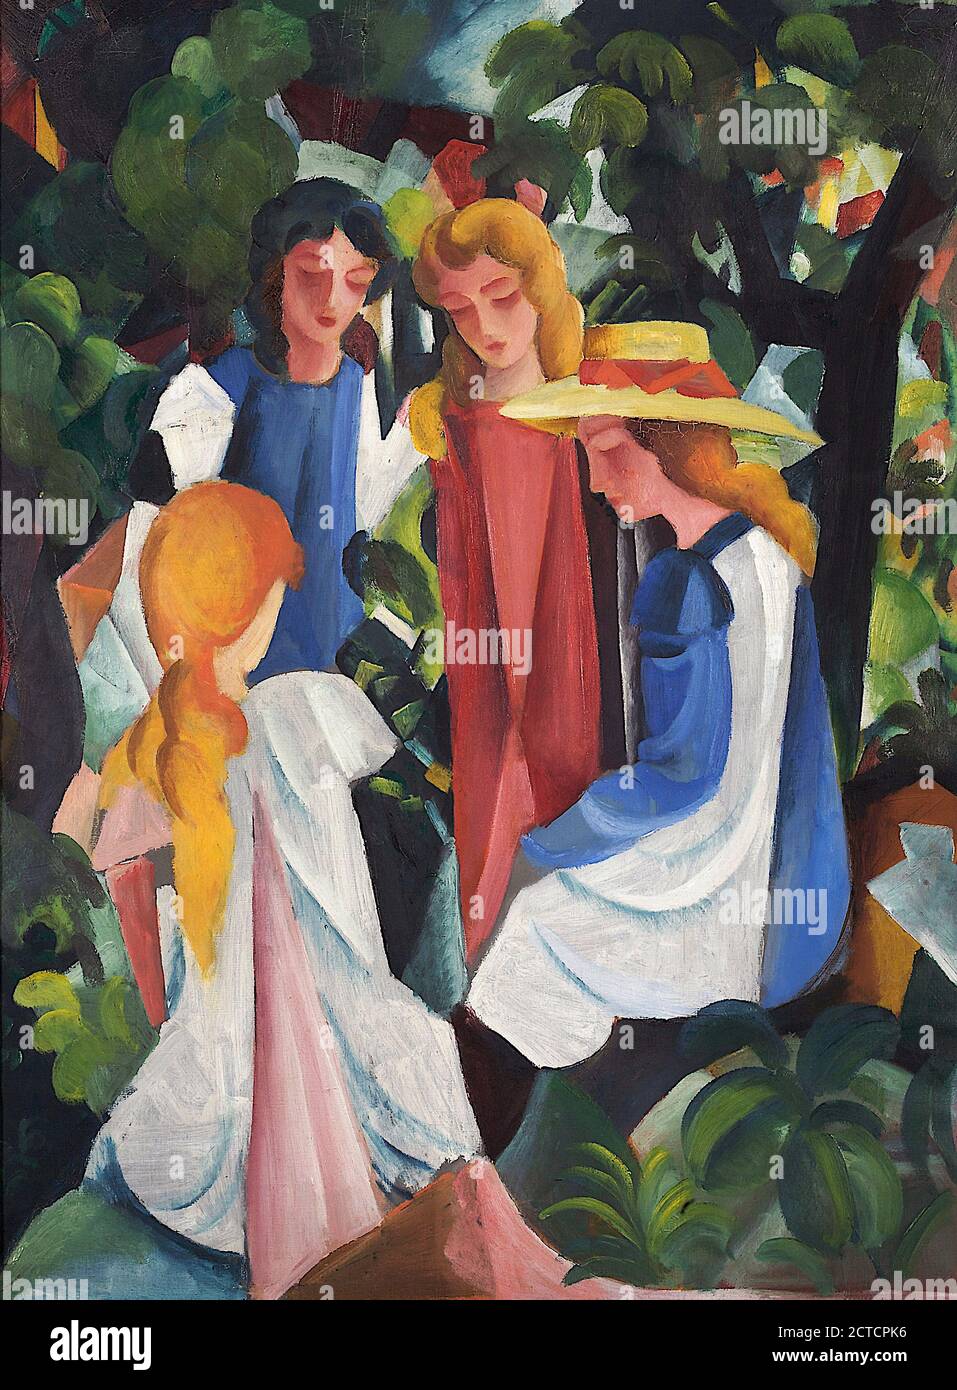 Quattro ragazze del pittore espressionista tedesco, August Macke (1887-1914), olio su tela, 1912/3 Foto Stock